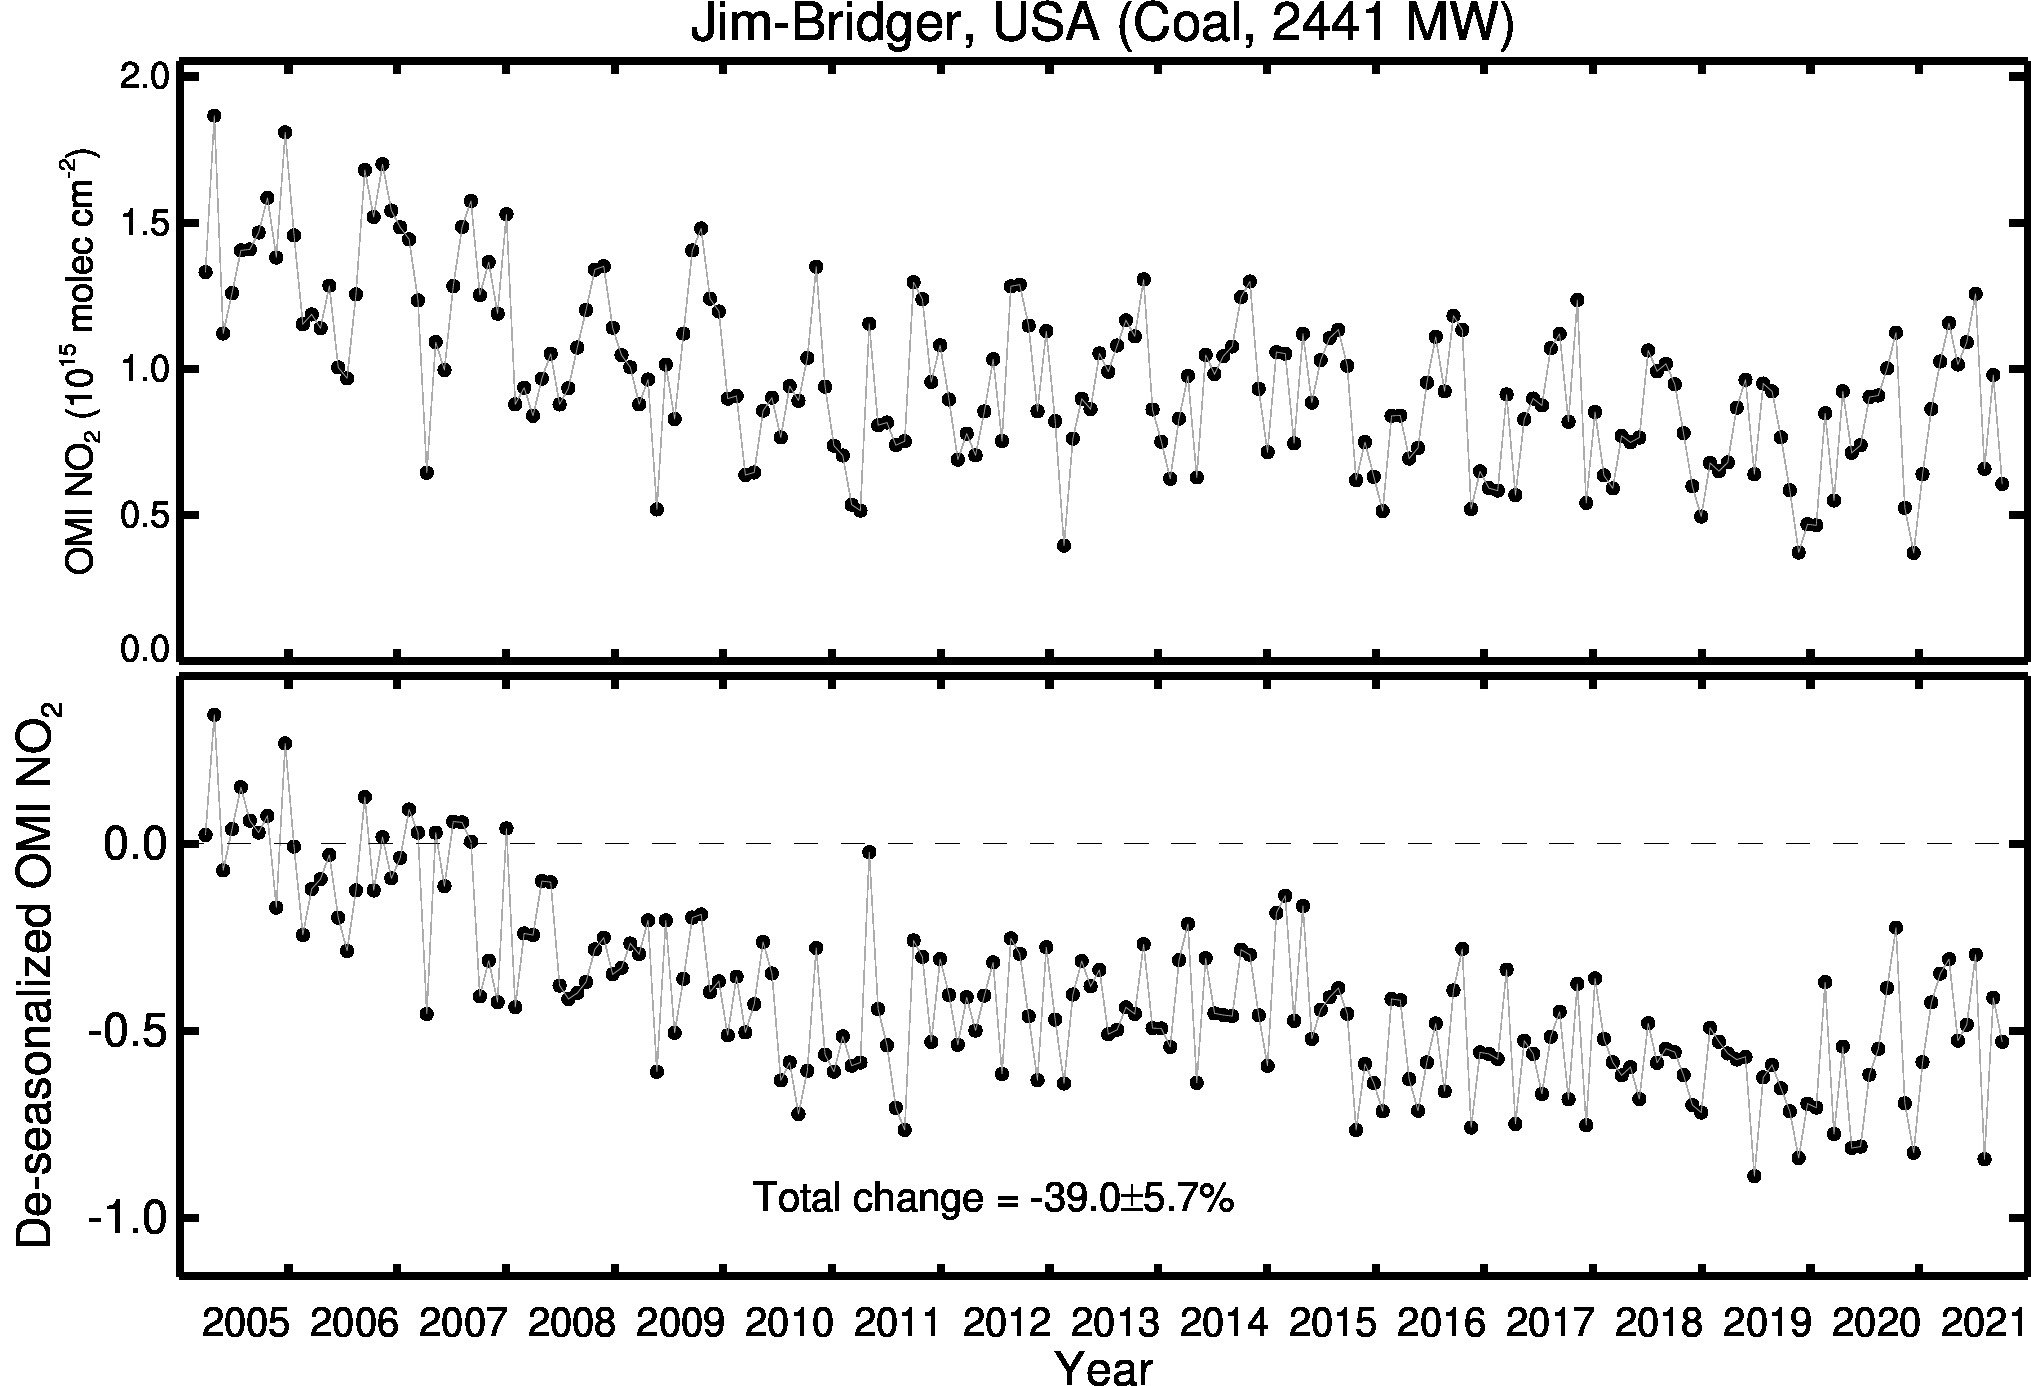 Jim Bridger Line Plot 2005-2021